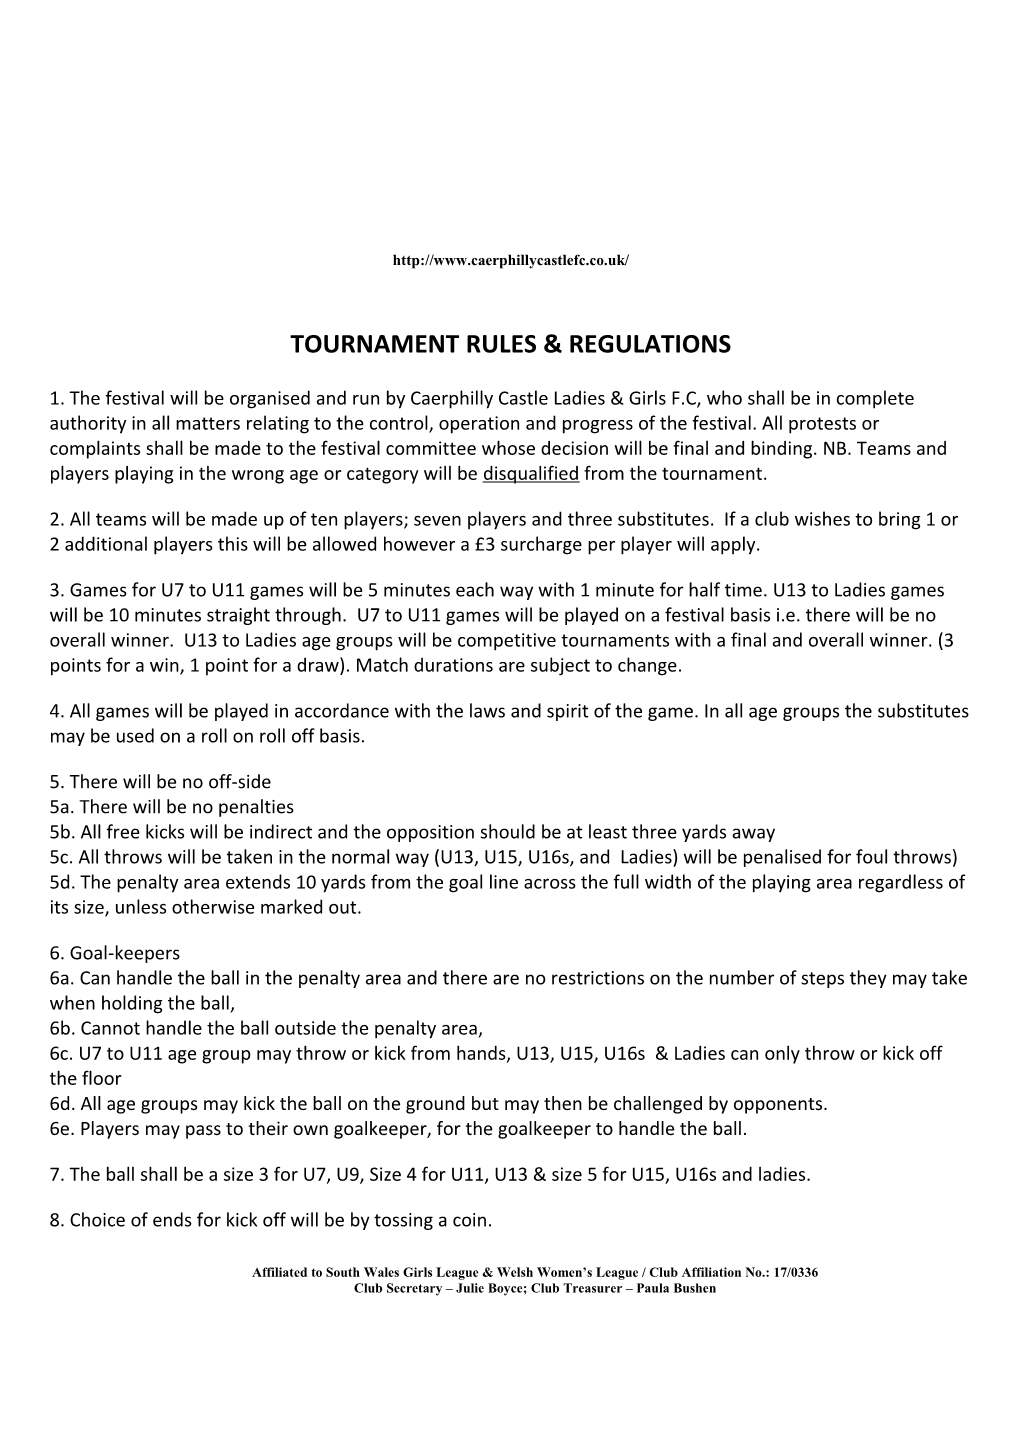 Tournament Rules & Regulations